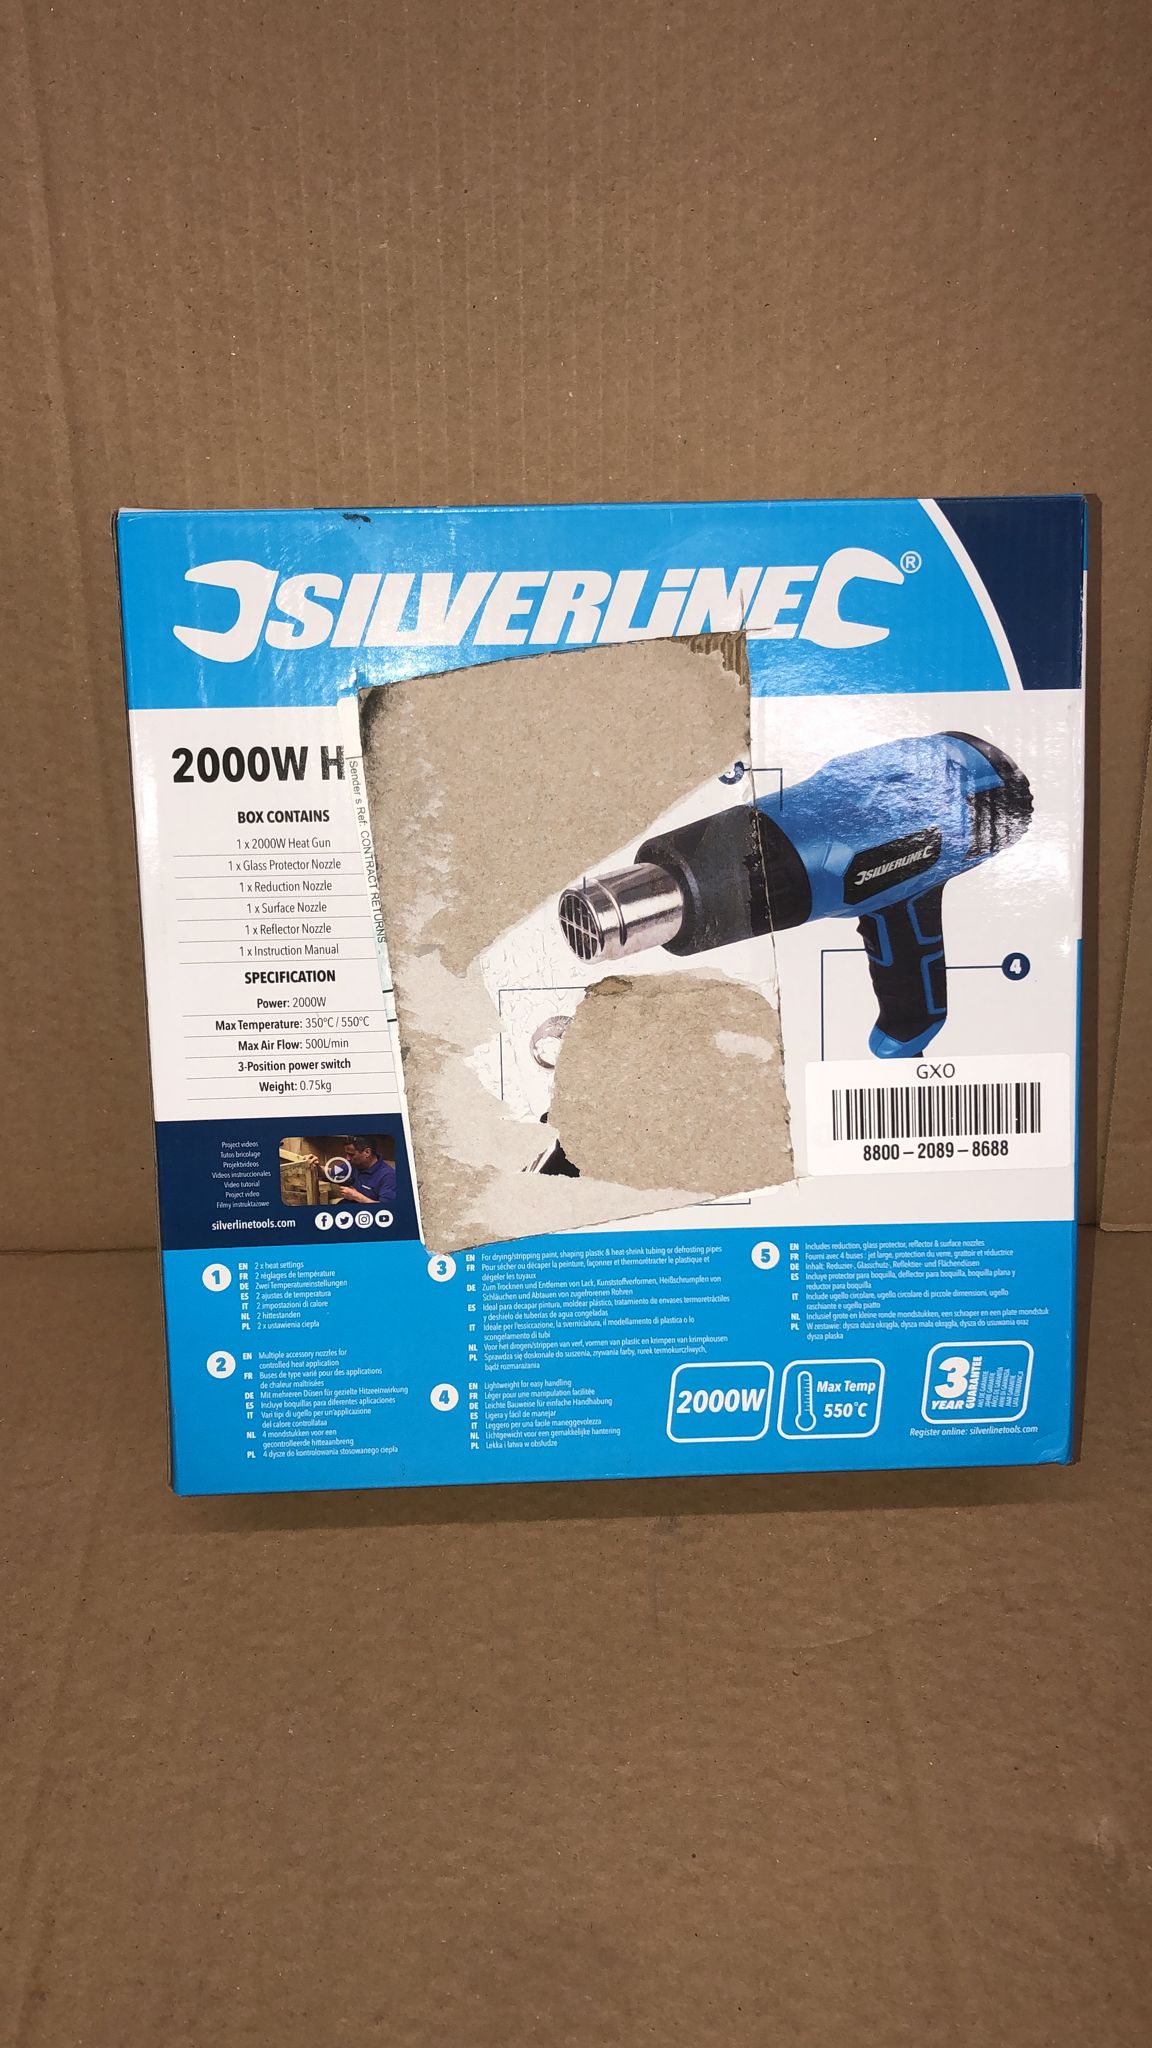 Silverline DIY 550 C Heat Gun 127655 Power Tools 2000W 8679